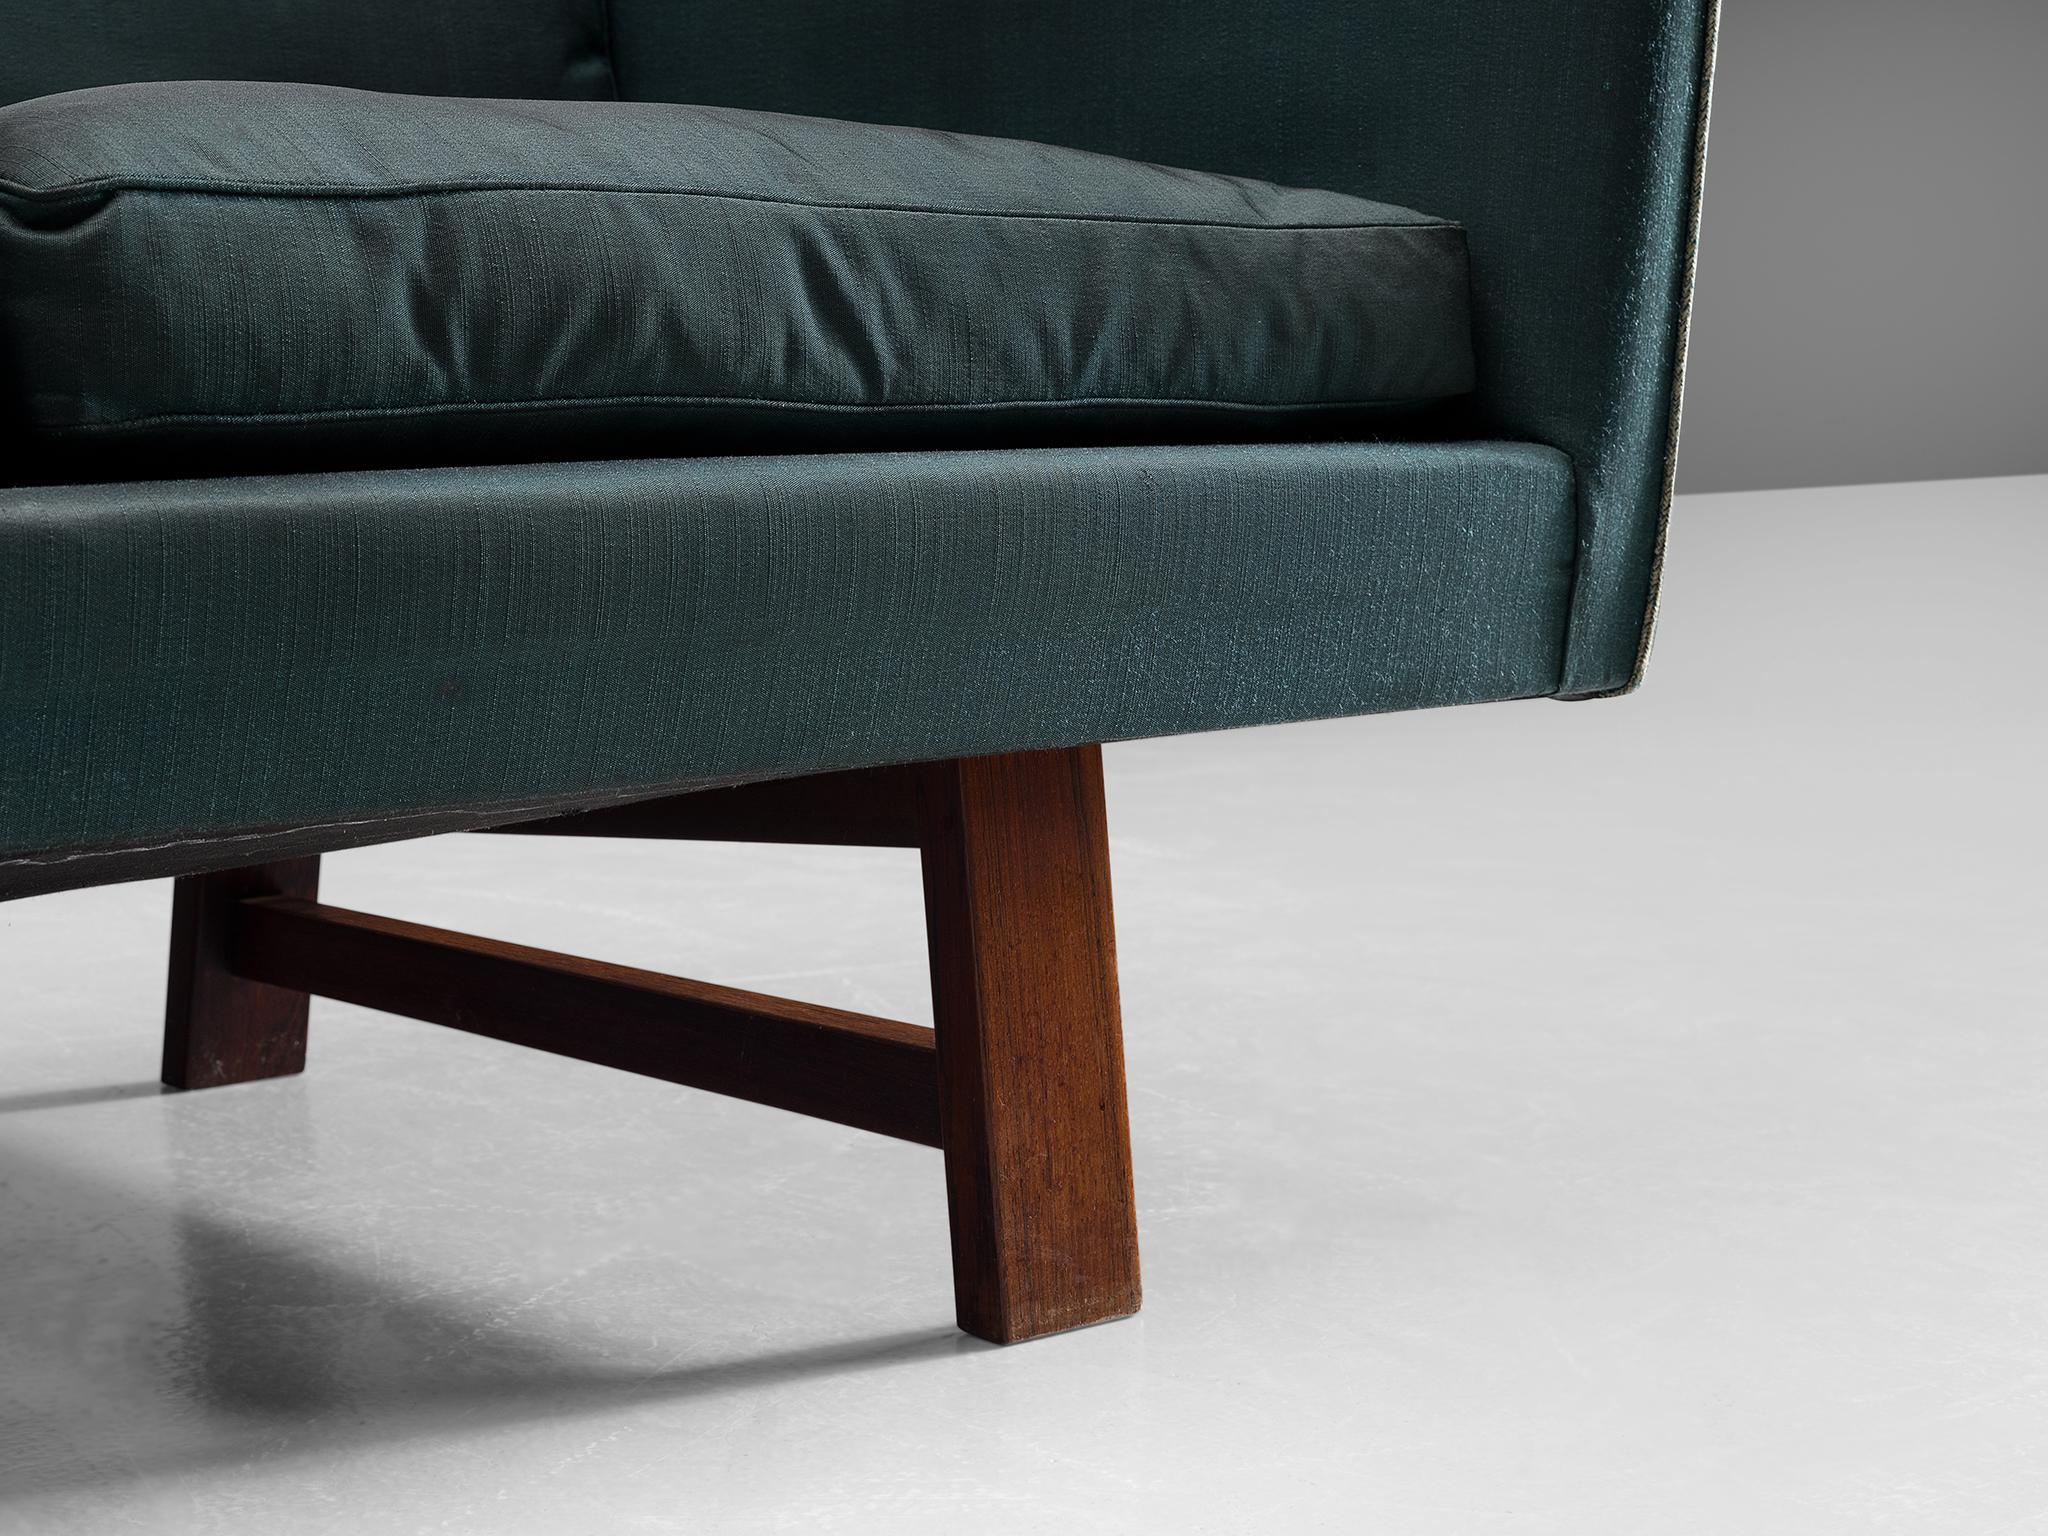 Fabric Danish Three-Seat Sofa in Turquoise Upholstery 